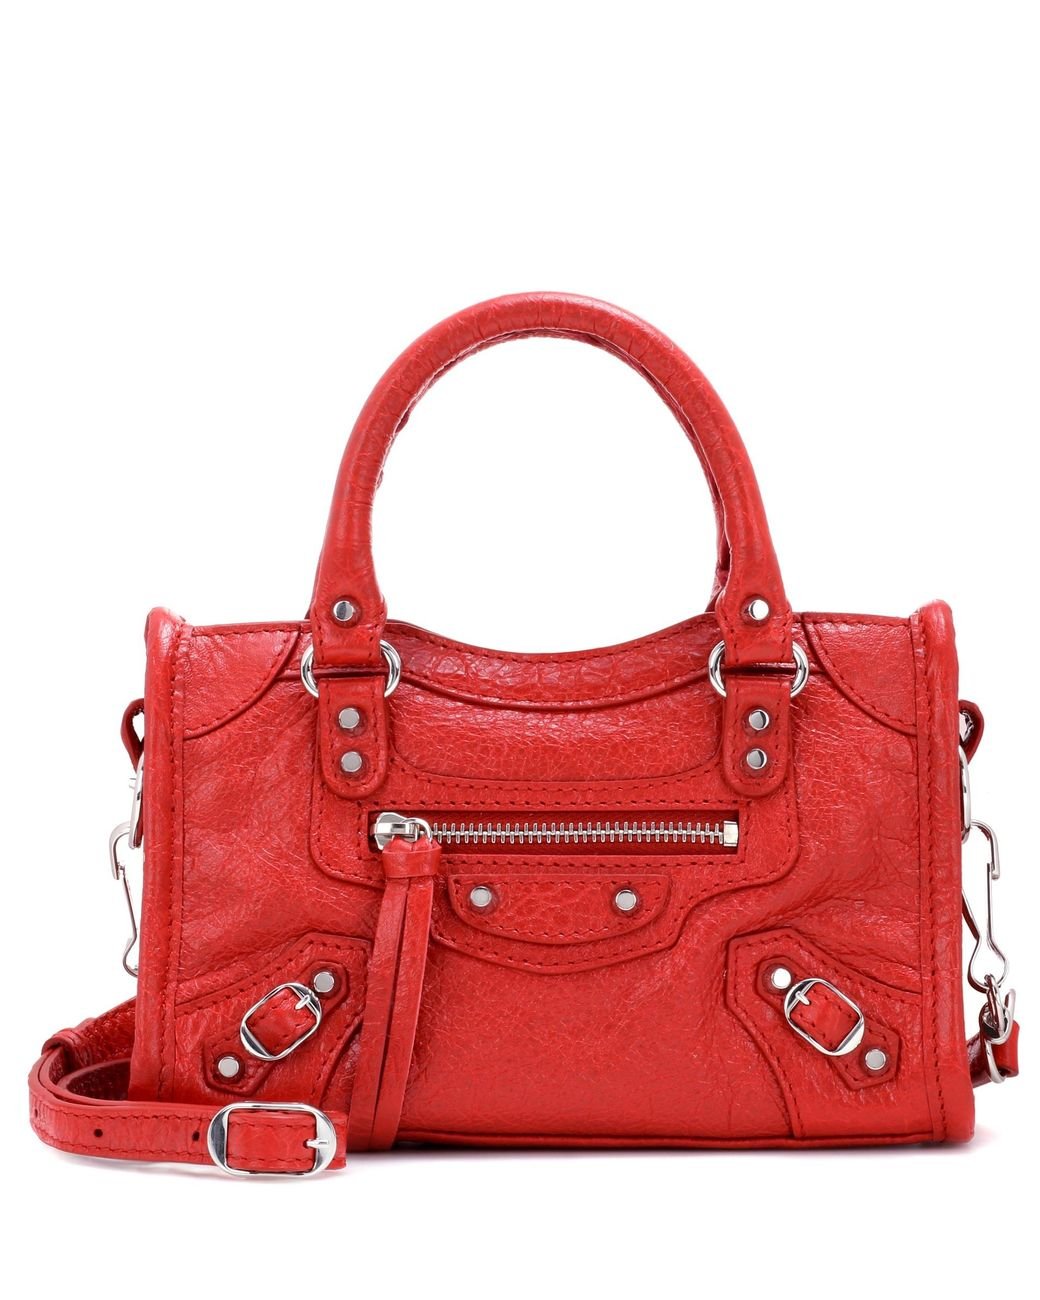 NWT 100 AUTH Balenciaga 115748 Red Leather Classic City Bag  eBay